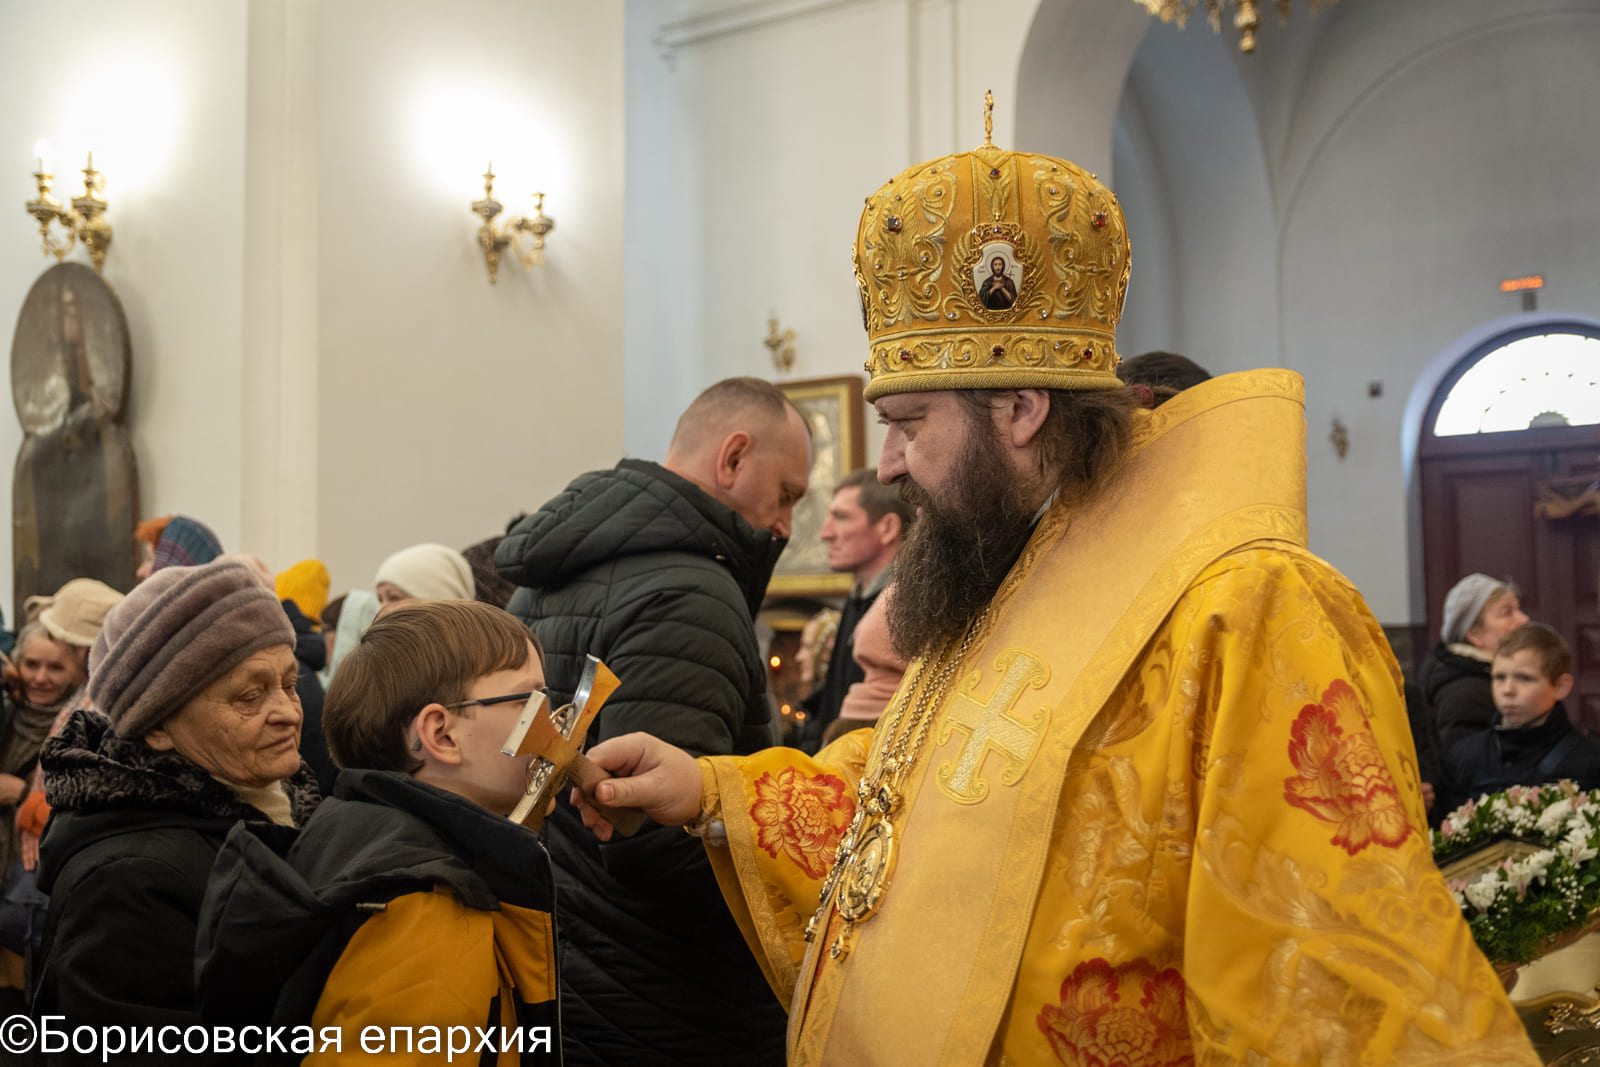 Bishop Ambrose of Svetlogorsk Apointed as Bishop of Borisov and Maryinogorsk